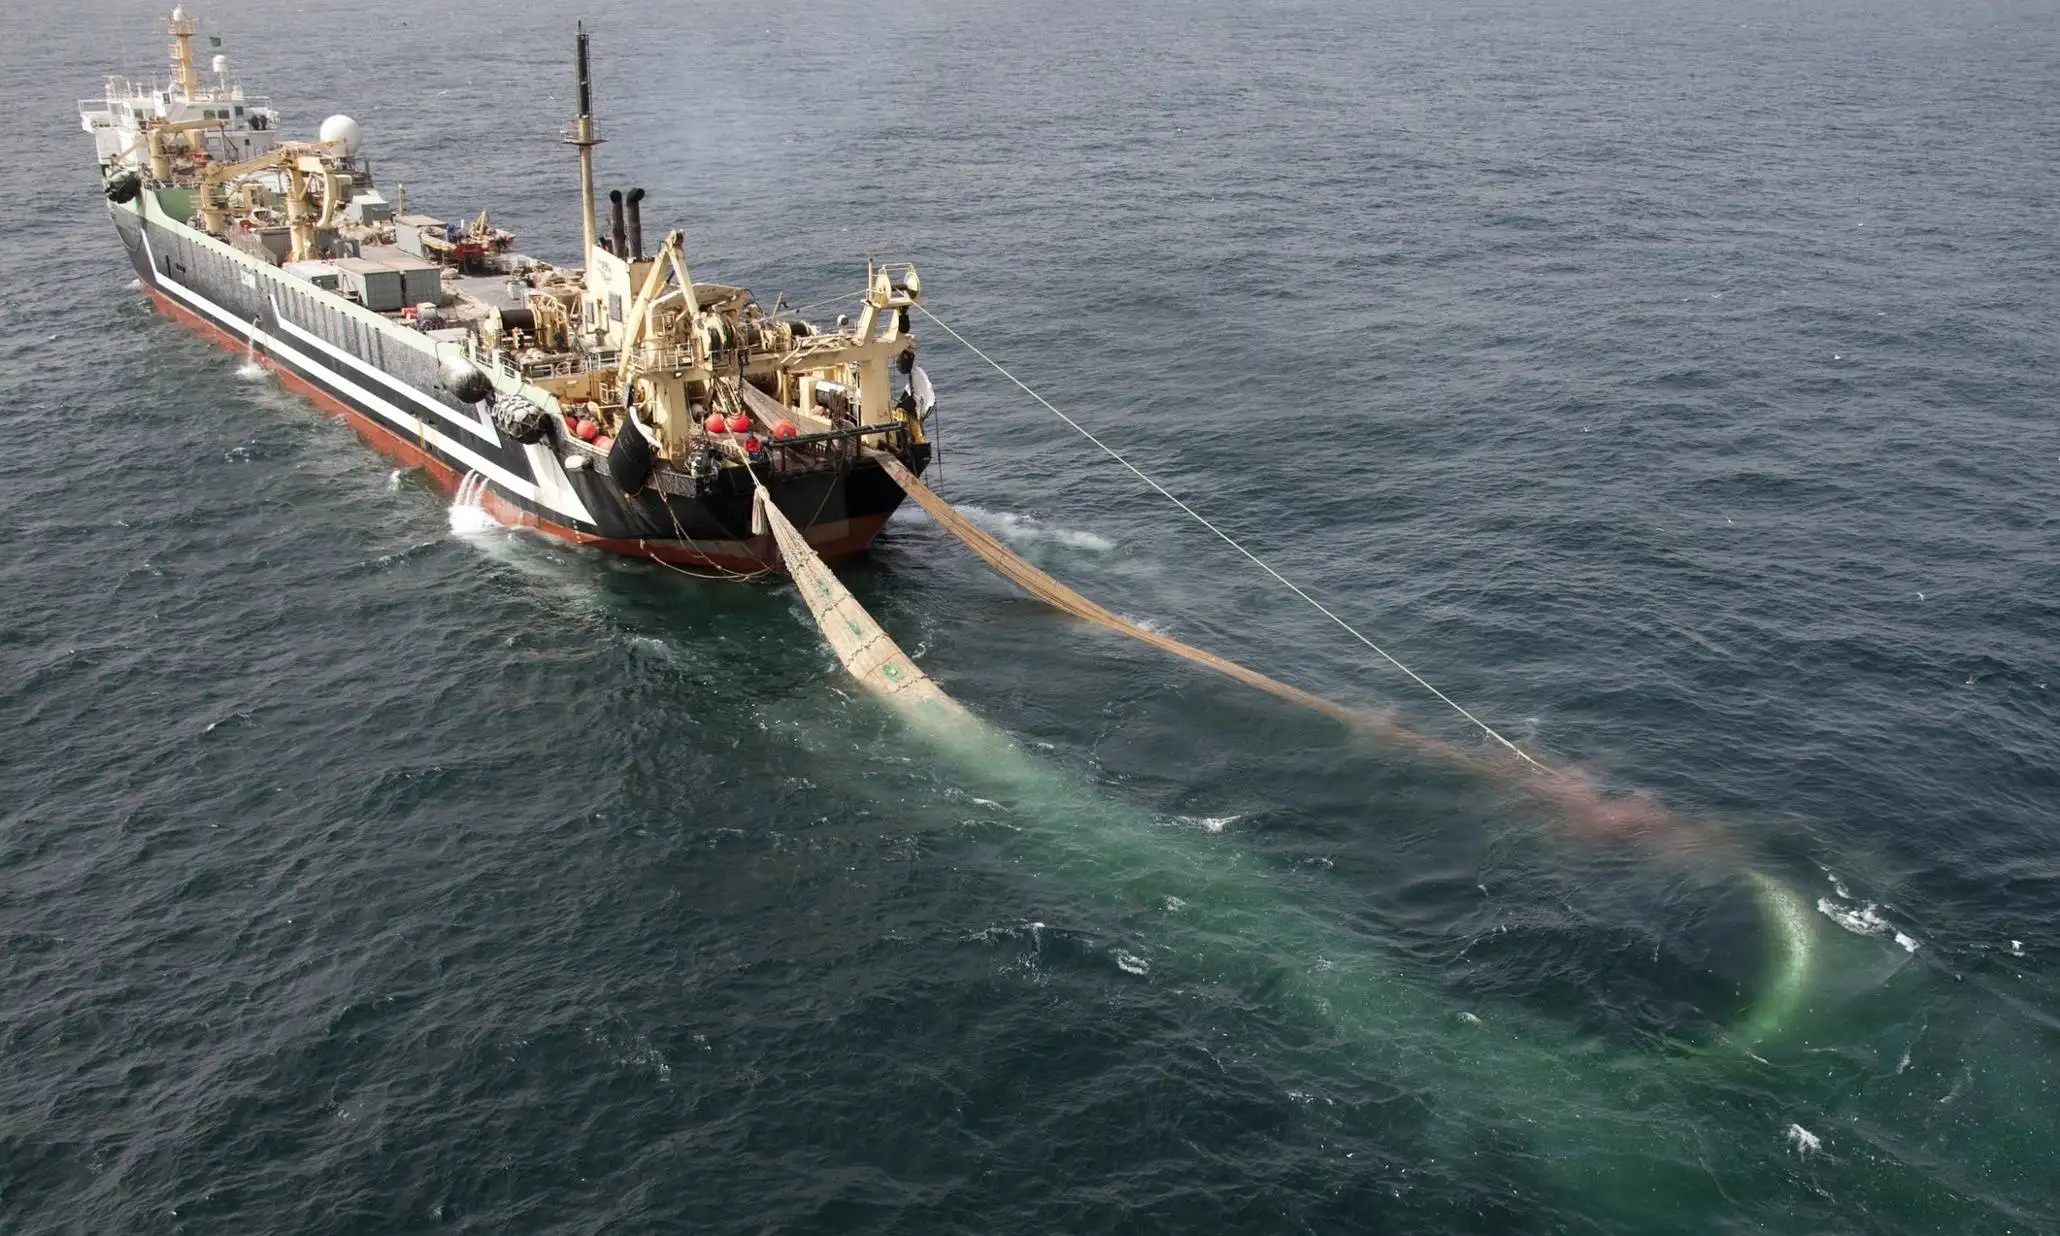 World's largest fishing trawler catching fish